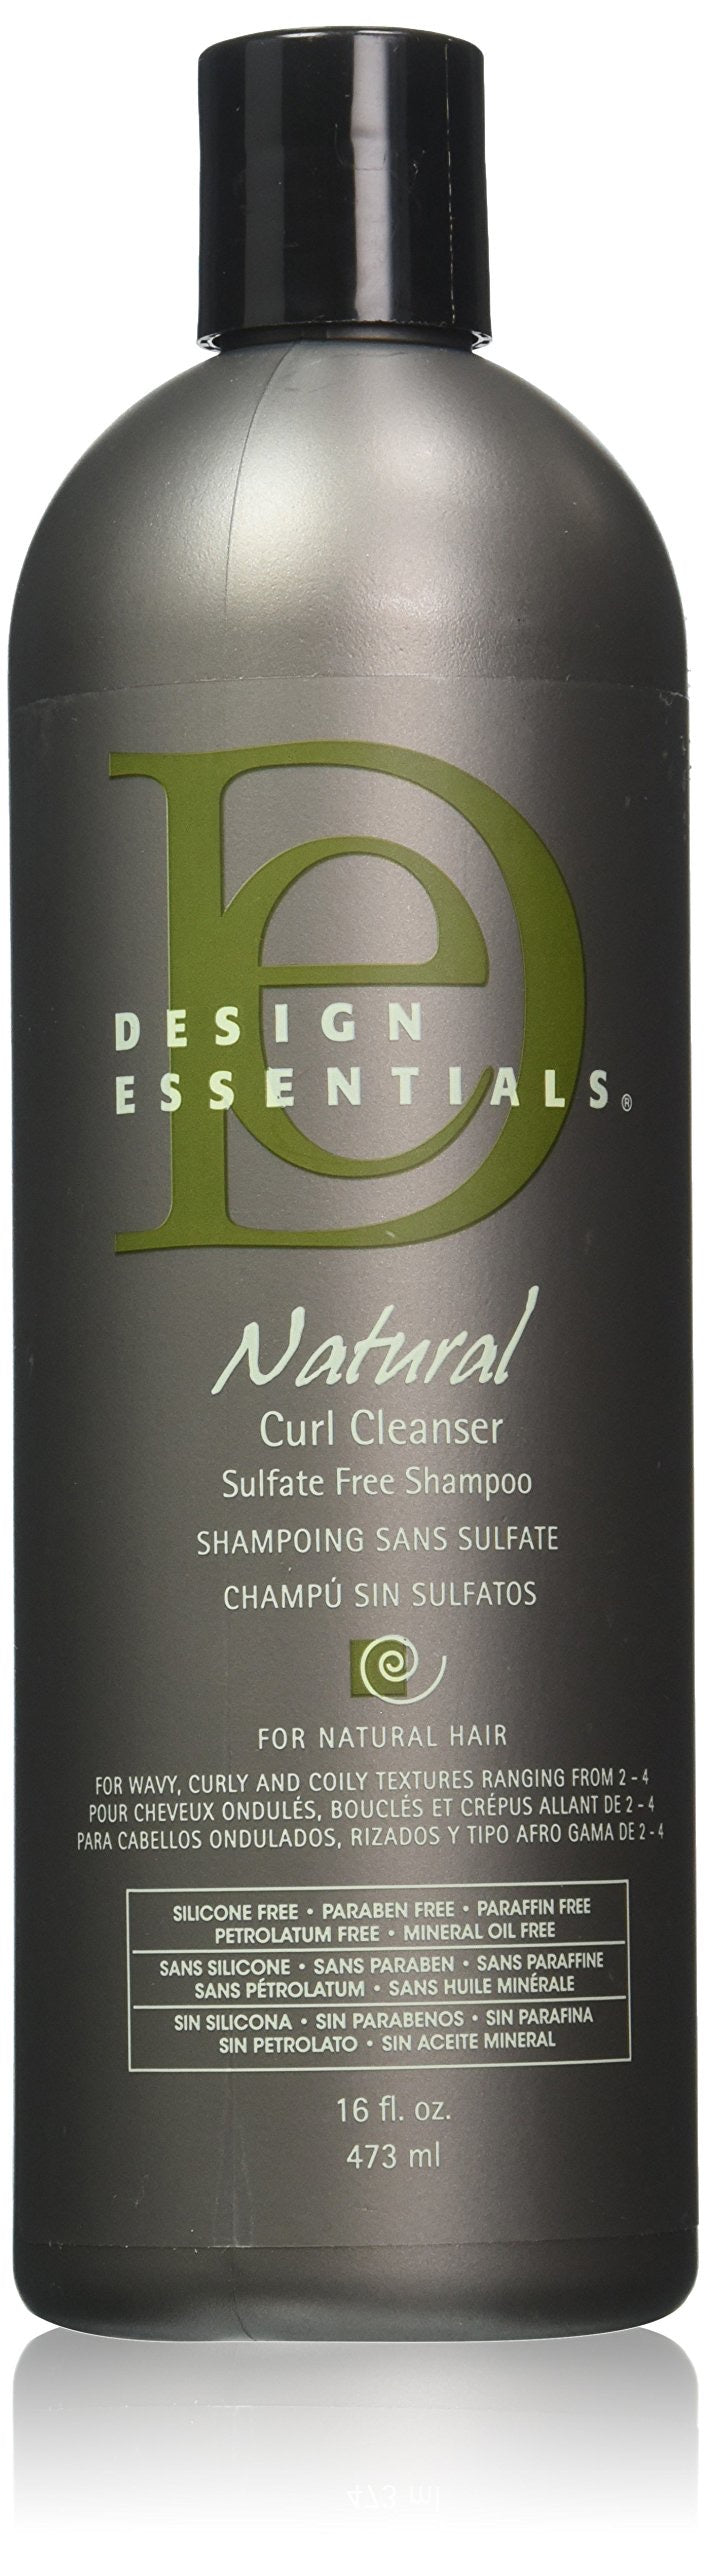 Design essentials natural curl cleanser shampoo 473ml